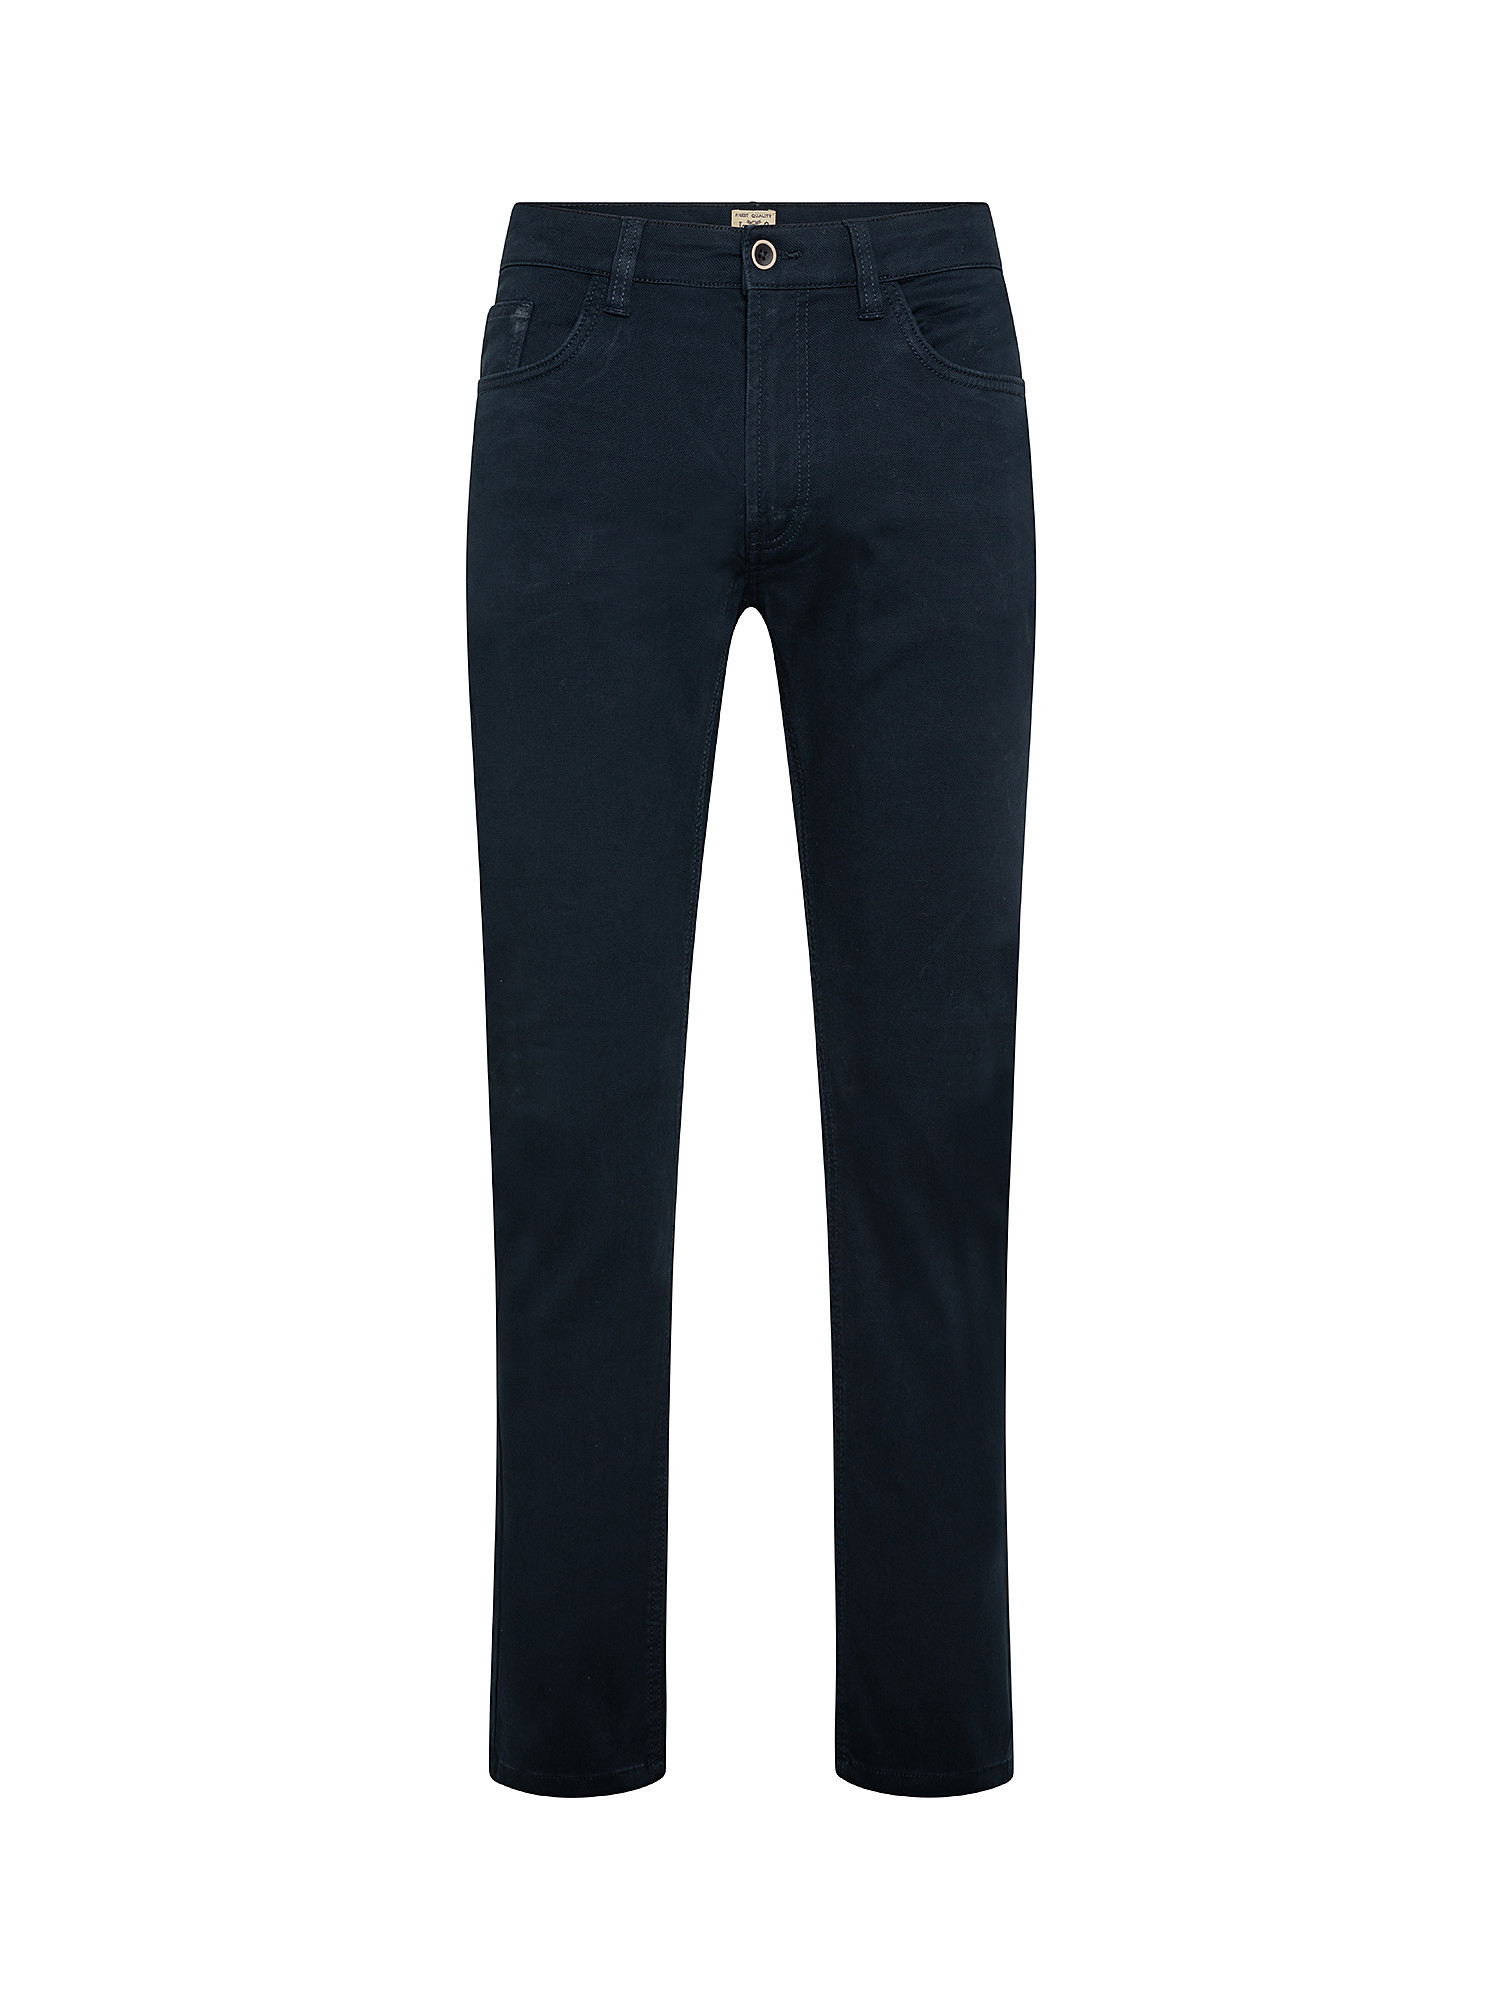 Pantalone cinque tasche slim comfort fit in cotone elasticizzato, Blu scuro, large image number 0